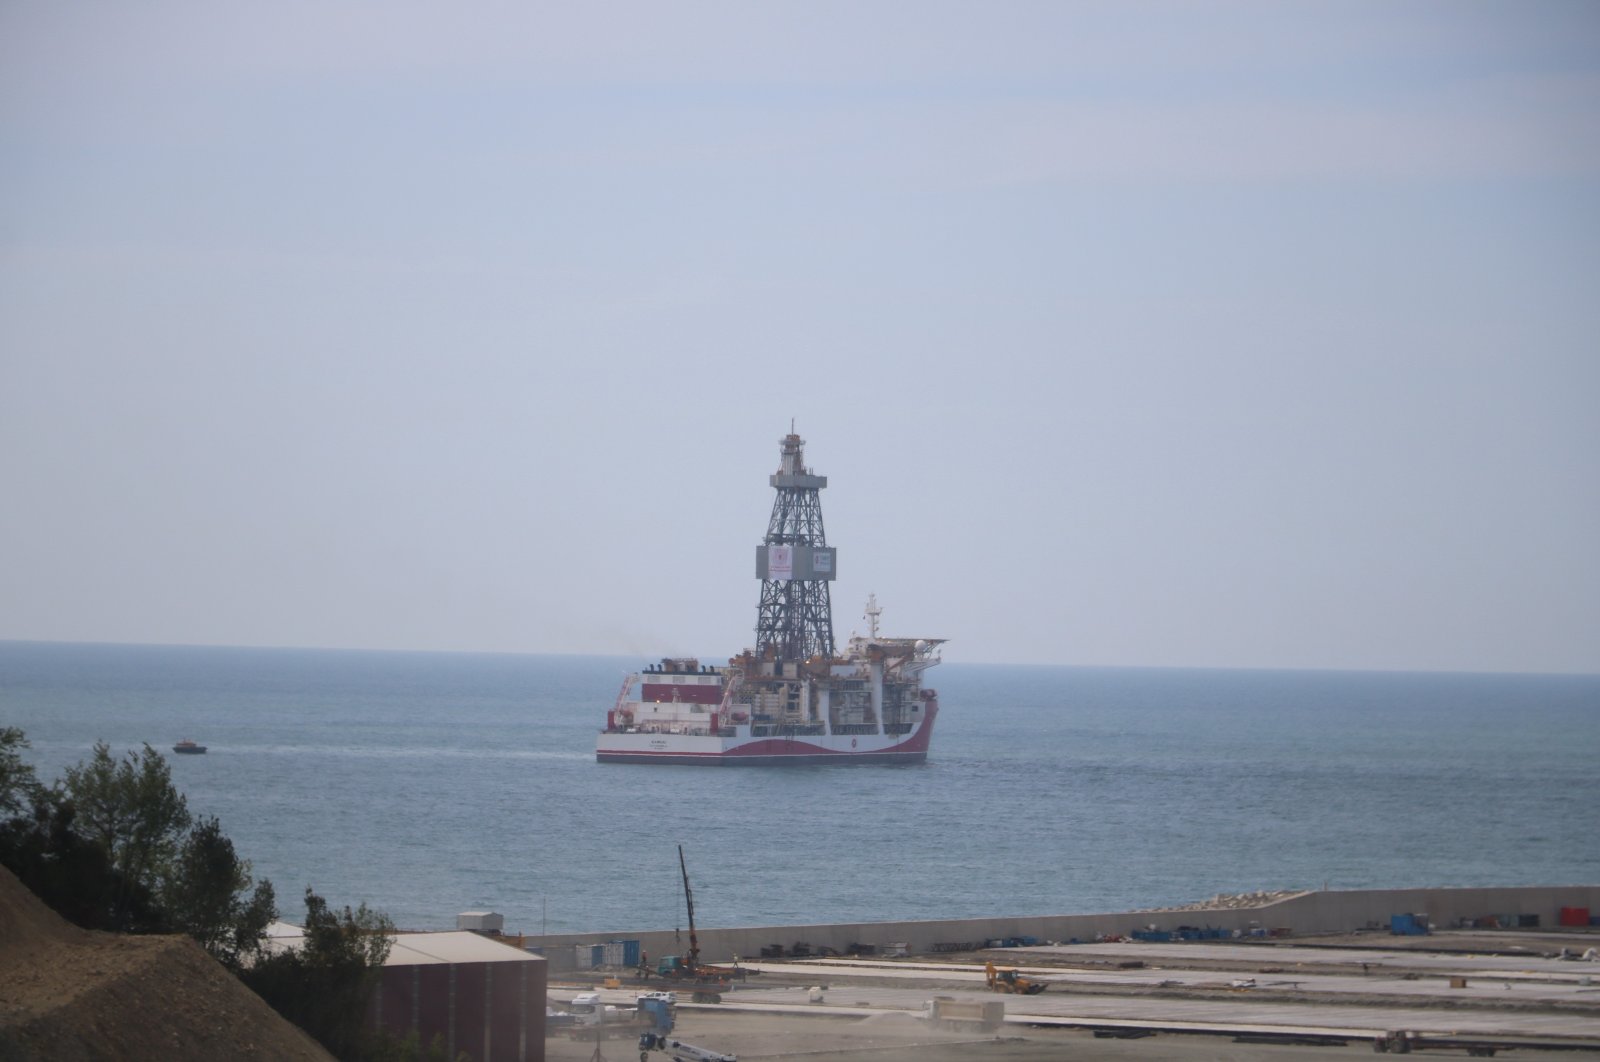 The Kanuni drillship is seen off the Port of Filyos in northern Zonguldak province, Turkey, May 4, 2021. (IHA Photo)